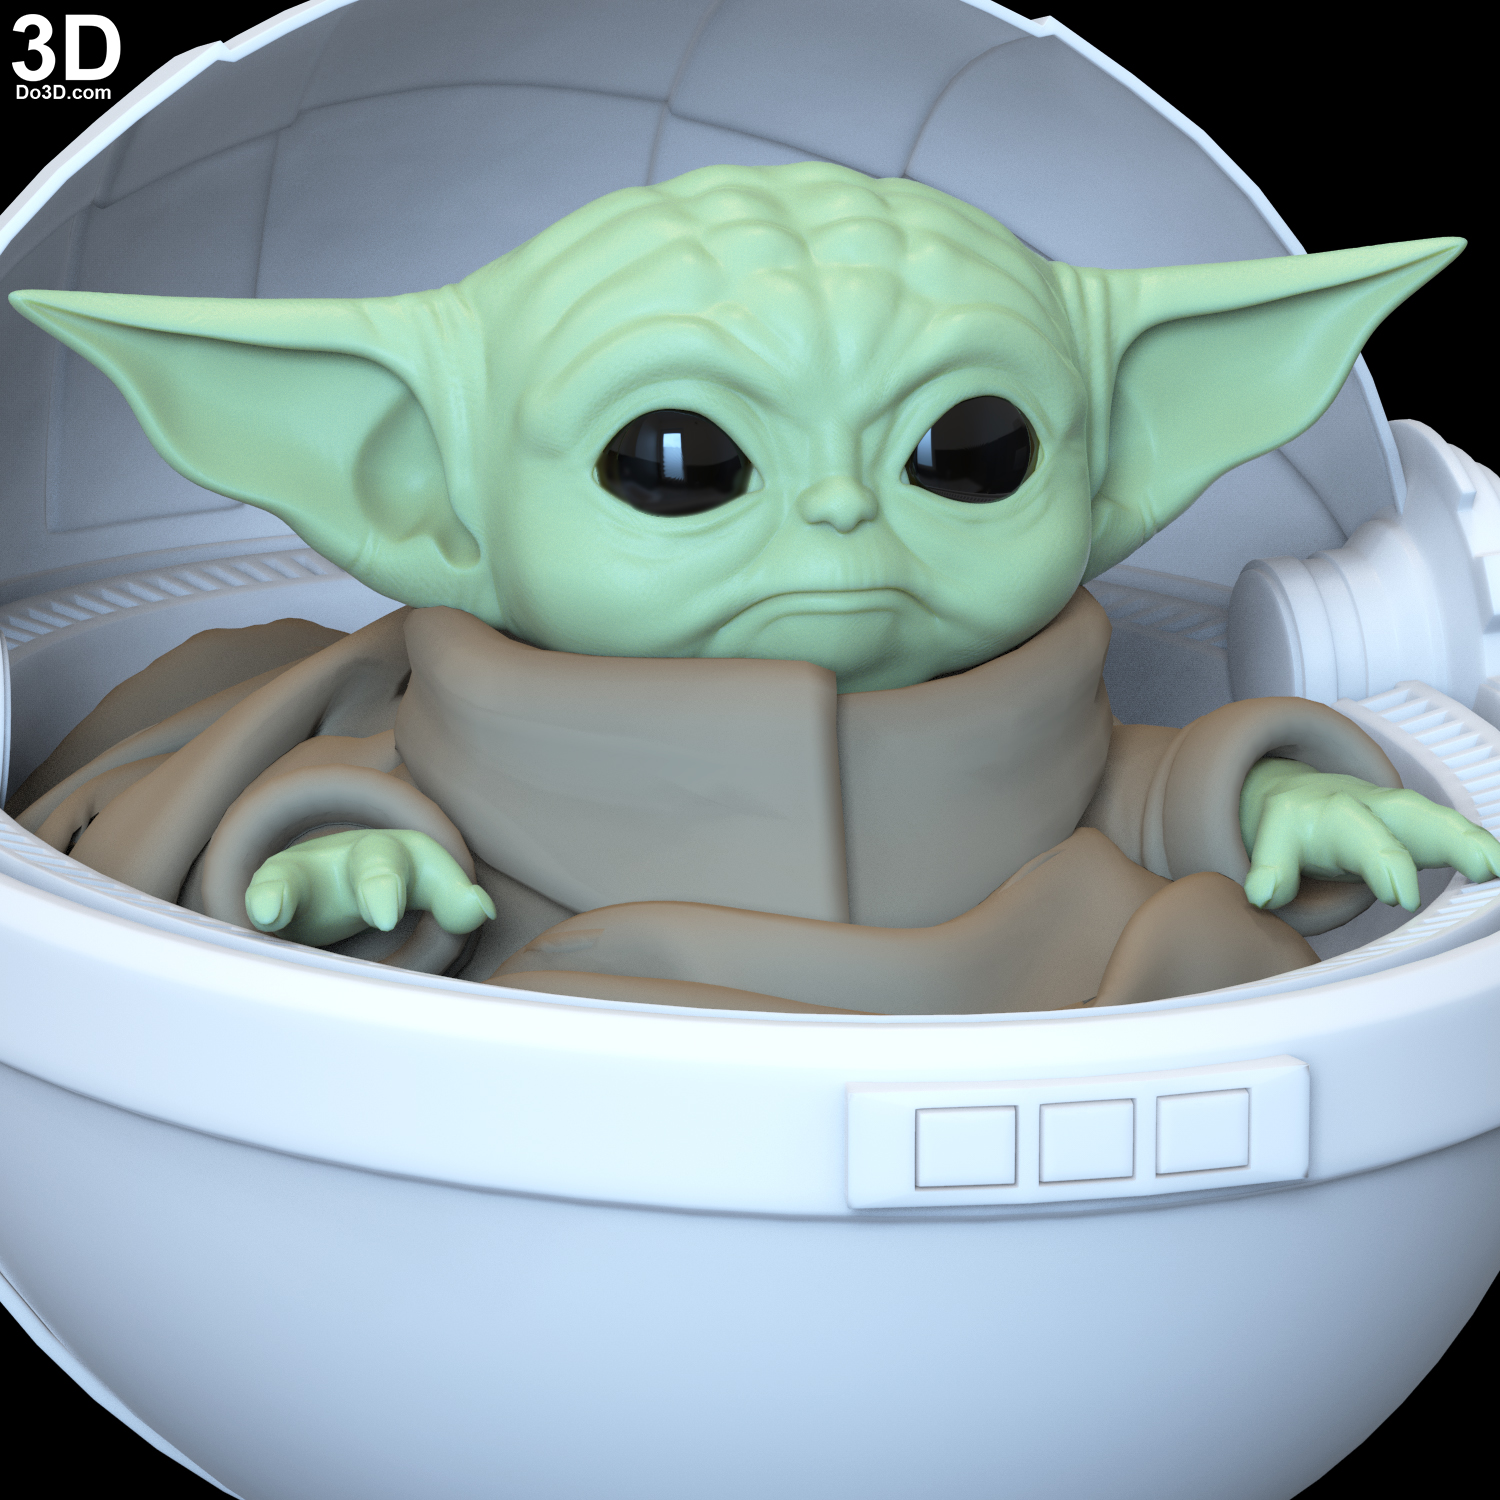 3D Printable Model: Baby Yoda from Mandalorian | Print File Format: STL